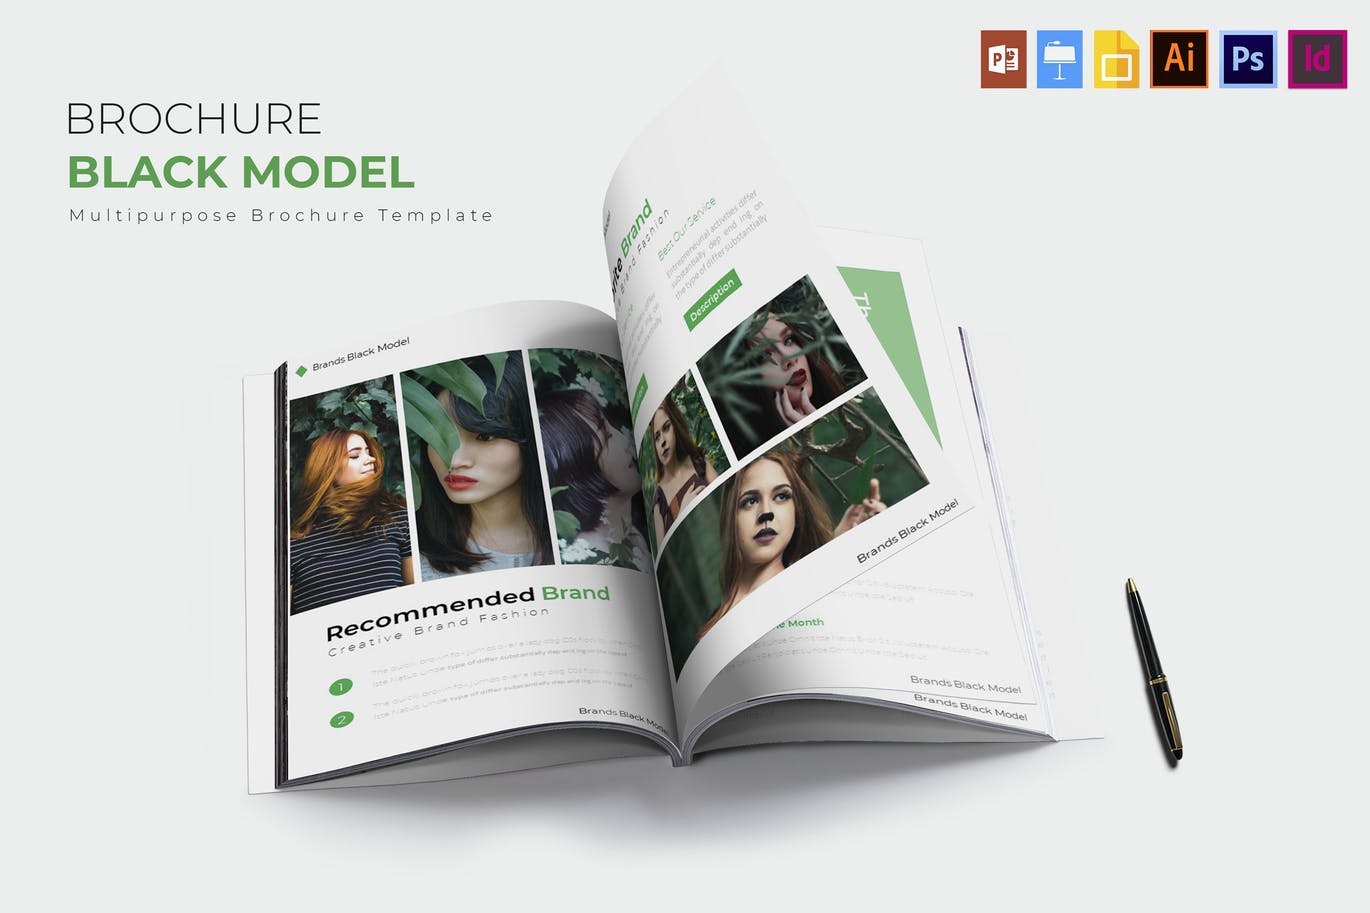 Black Model - Brochure Template